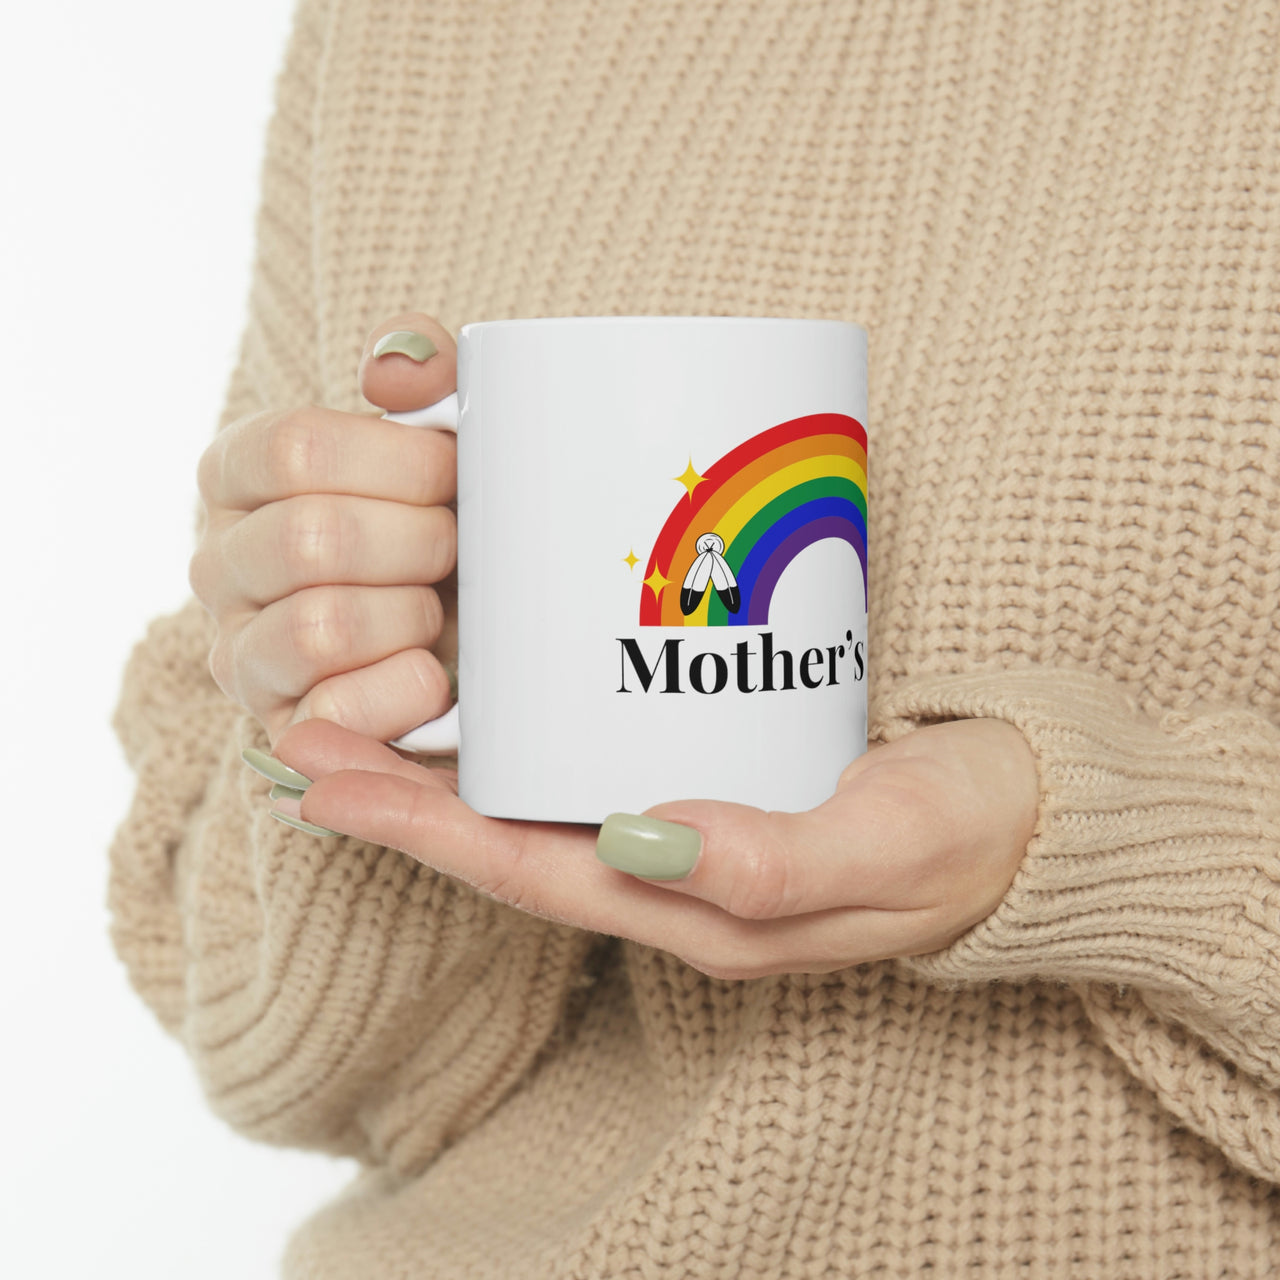 Two Spirit Flag Ceramic Mug  - Mother's Day Printify